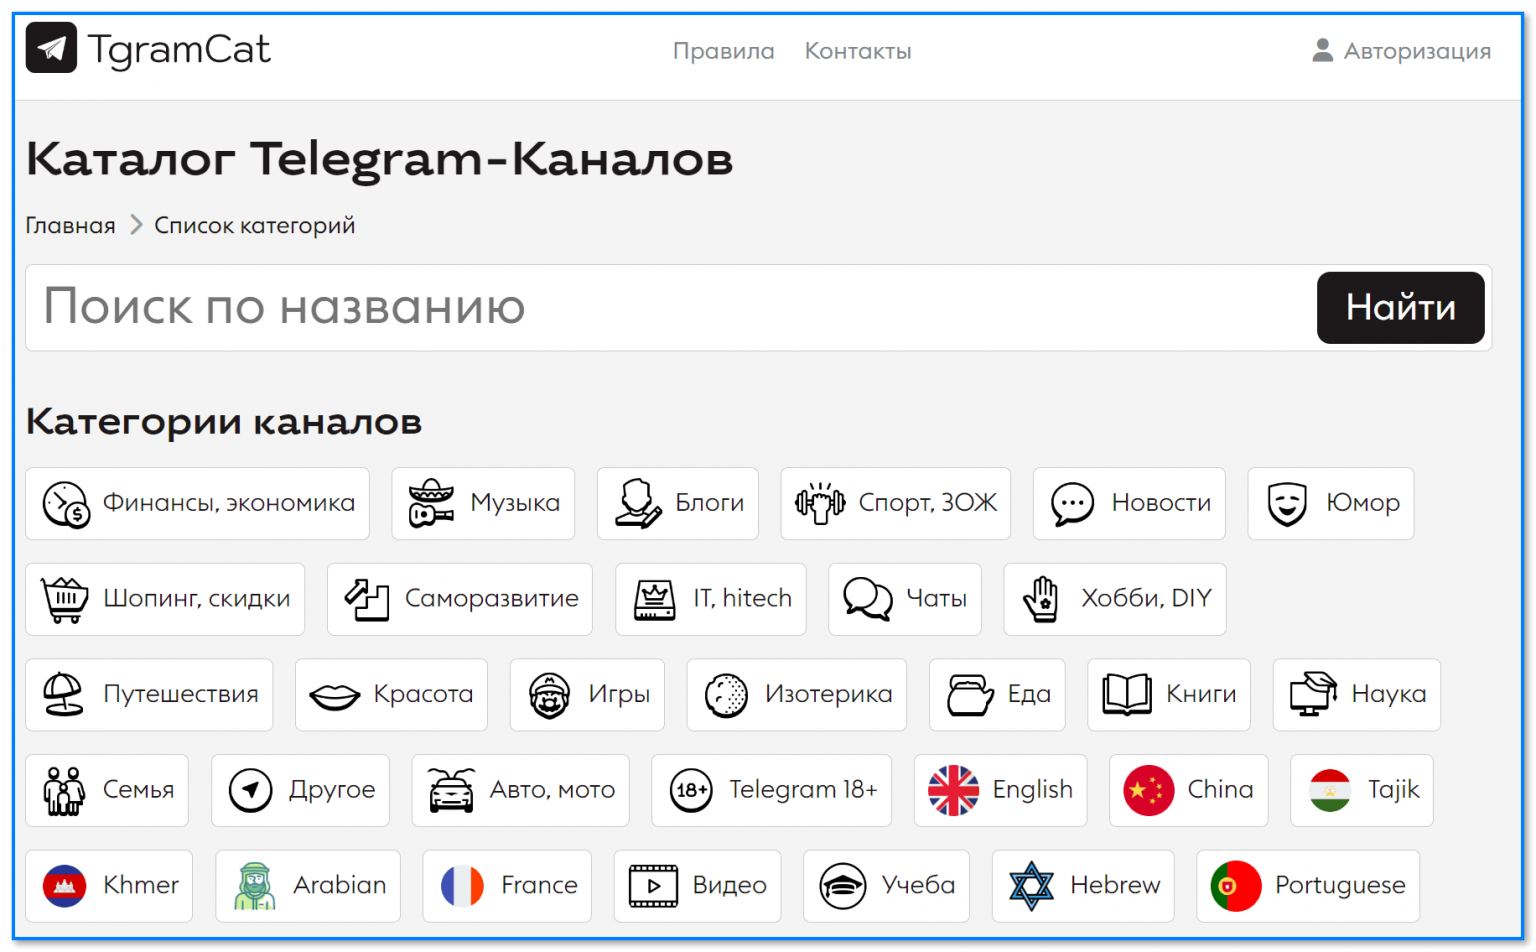 img-Katalog-Telegram-Kanalov-----skrin-s-sayta-TgramCat.png.